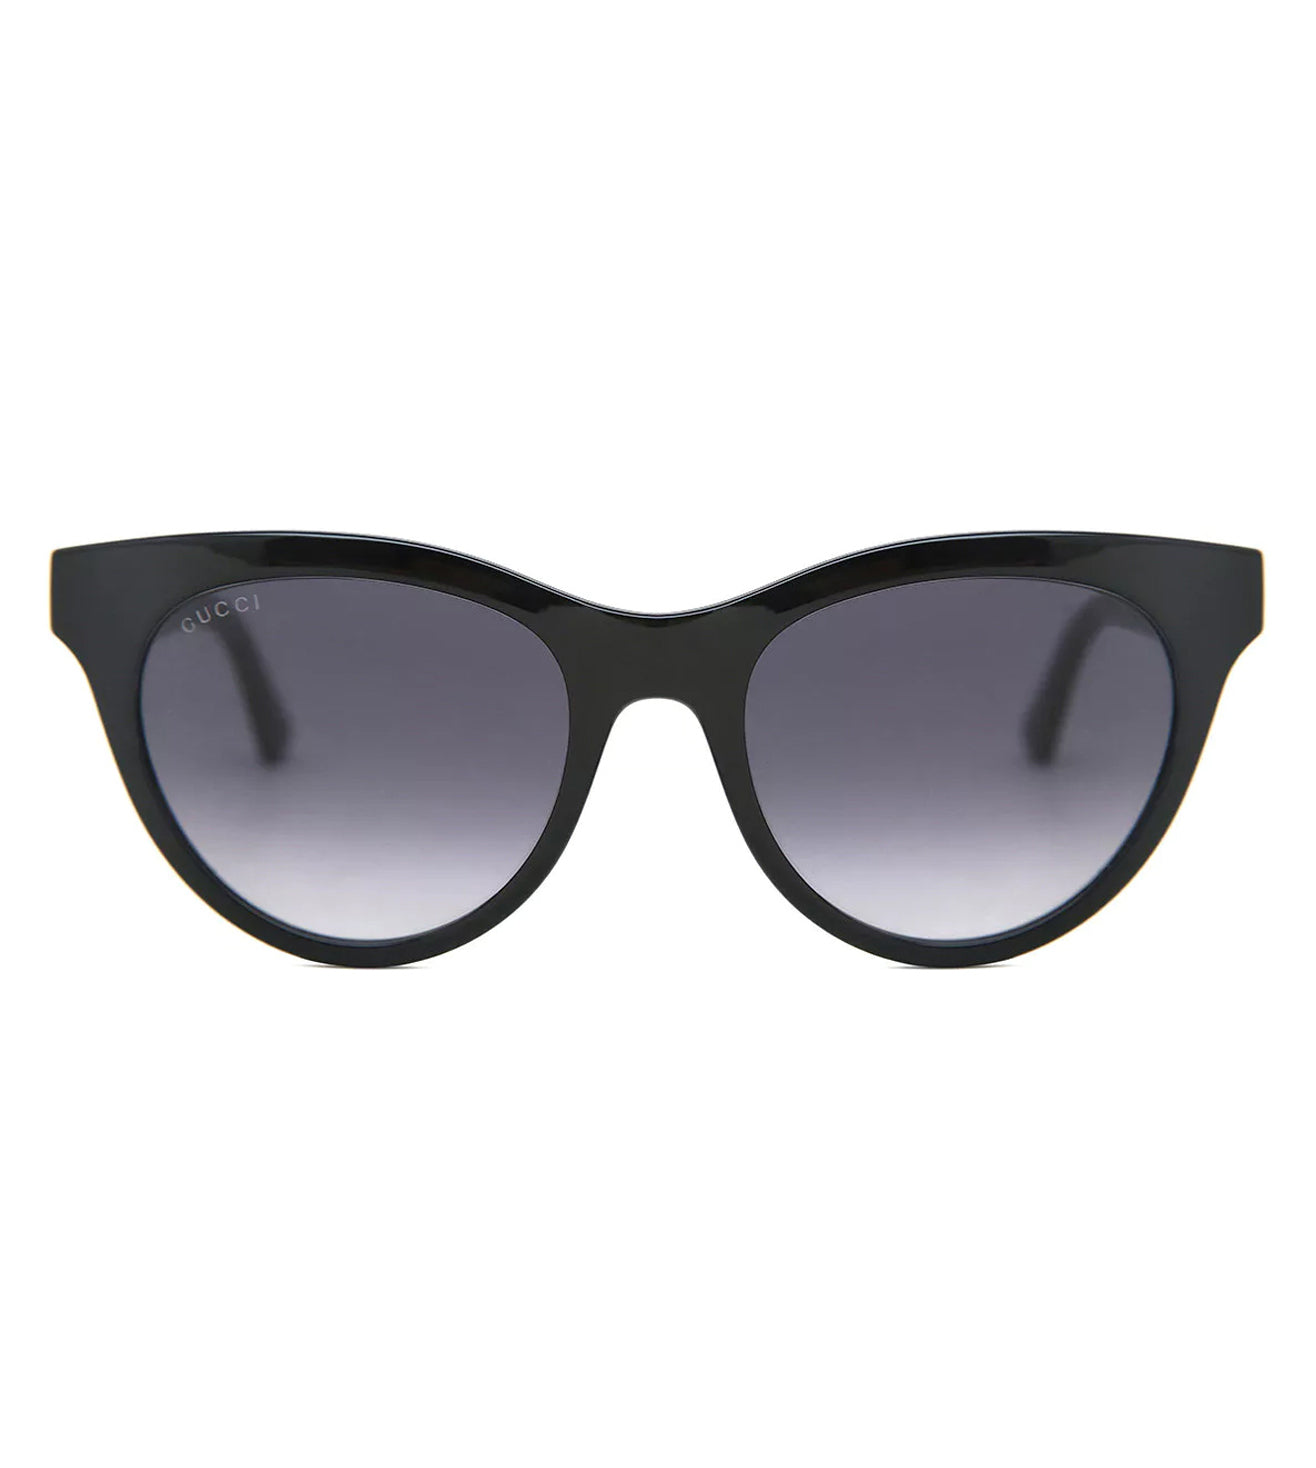 Gucci Women's Grey Cat-Eye Sunglasses